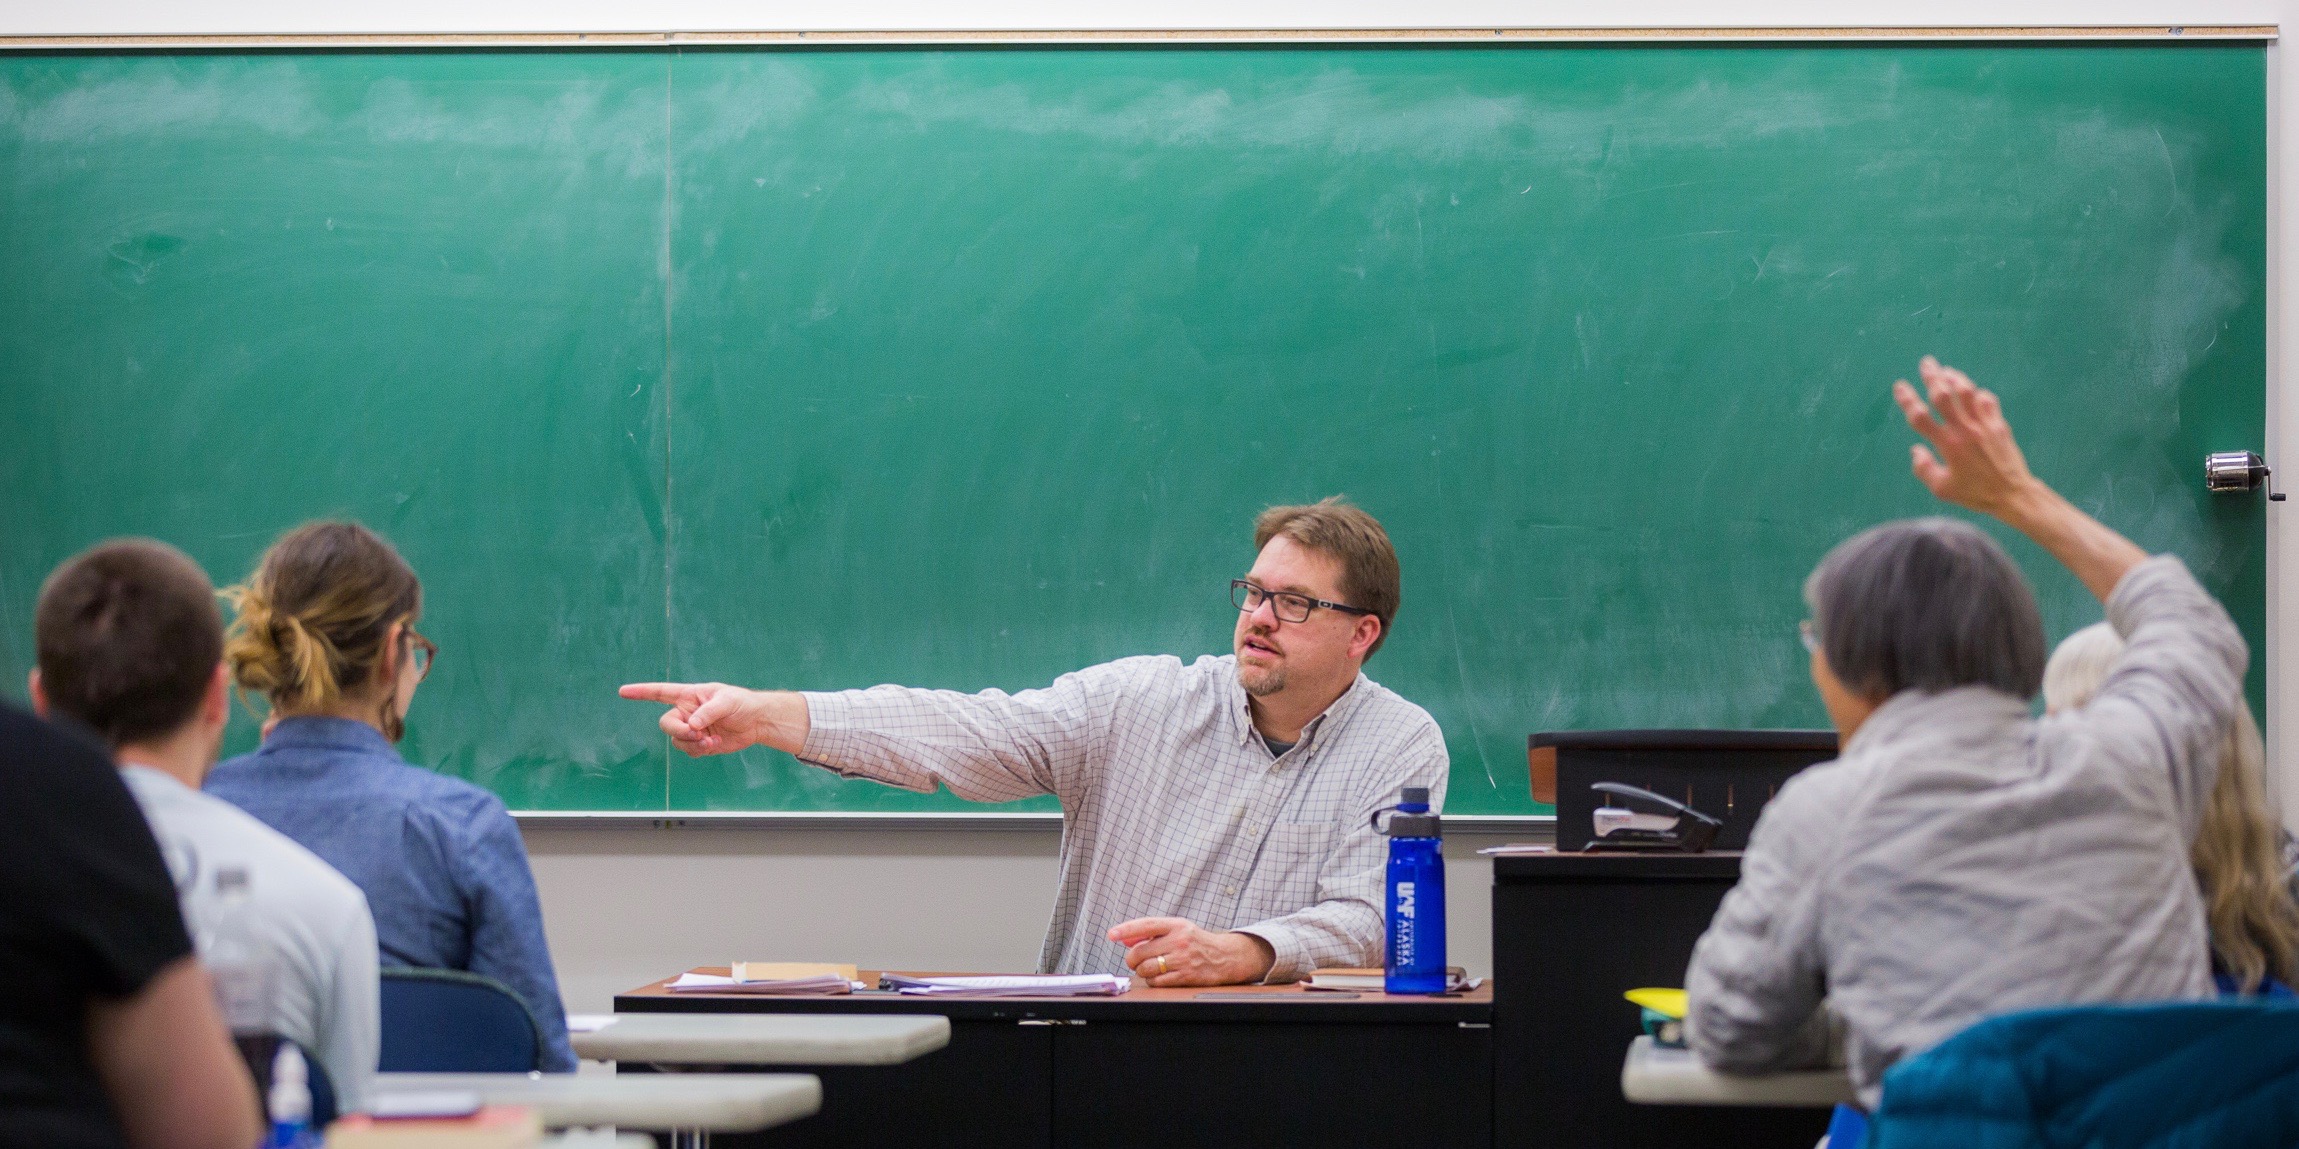 Associate Professor Daryl Farmer leads a class. Students are attentive.